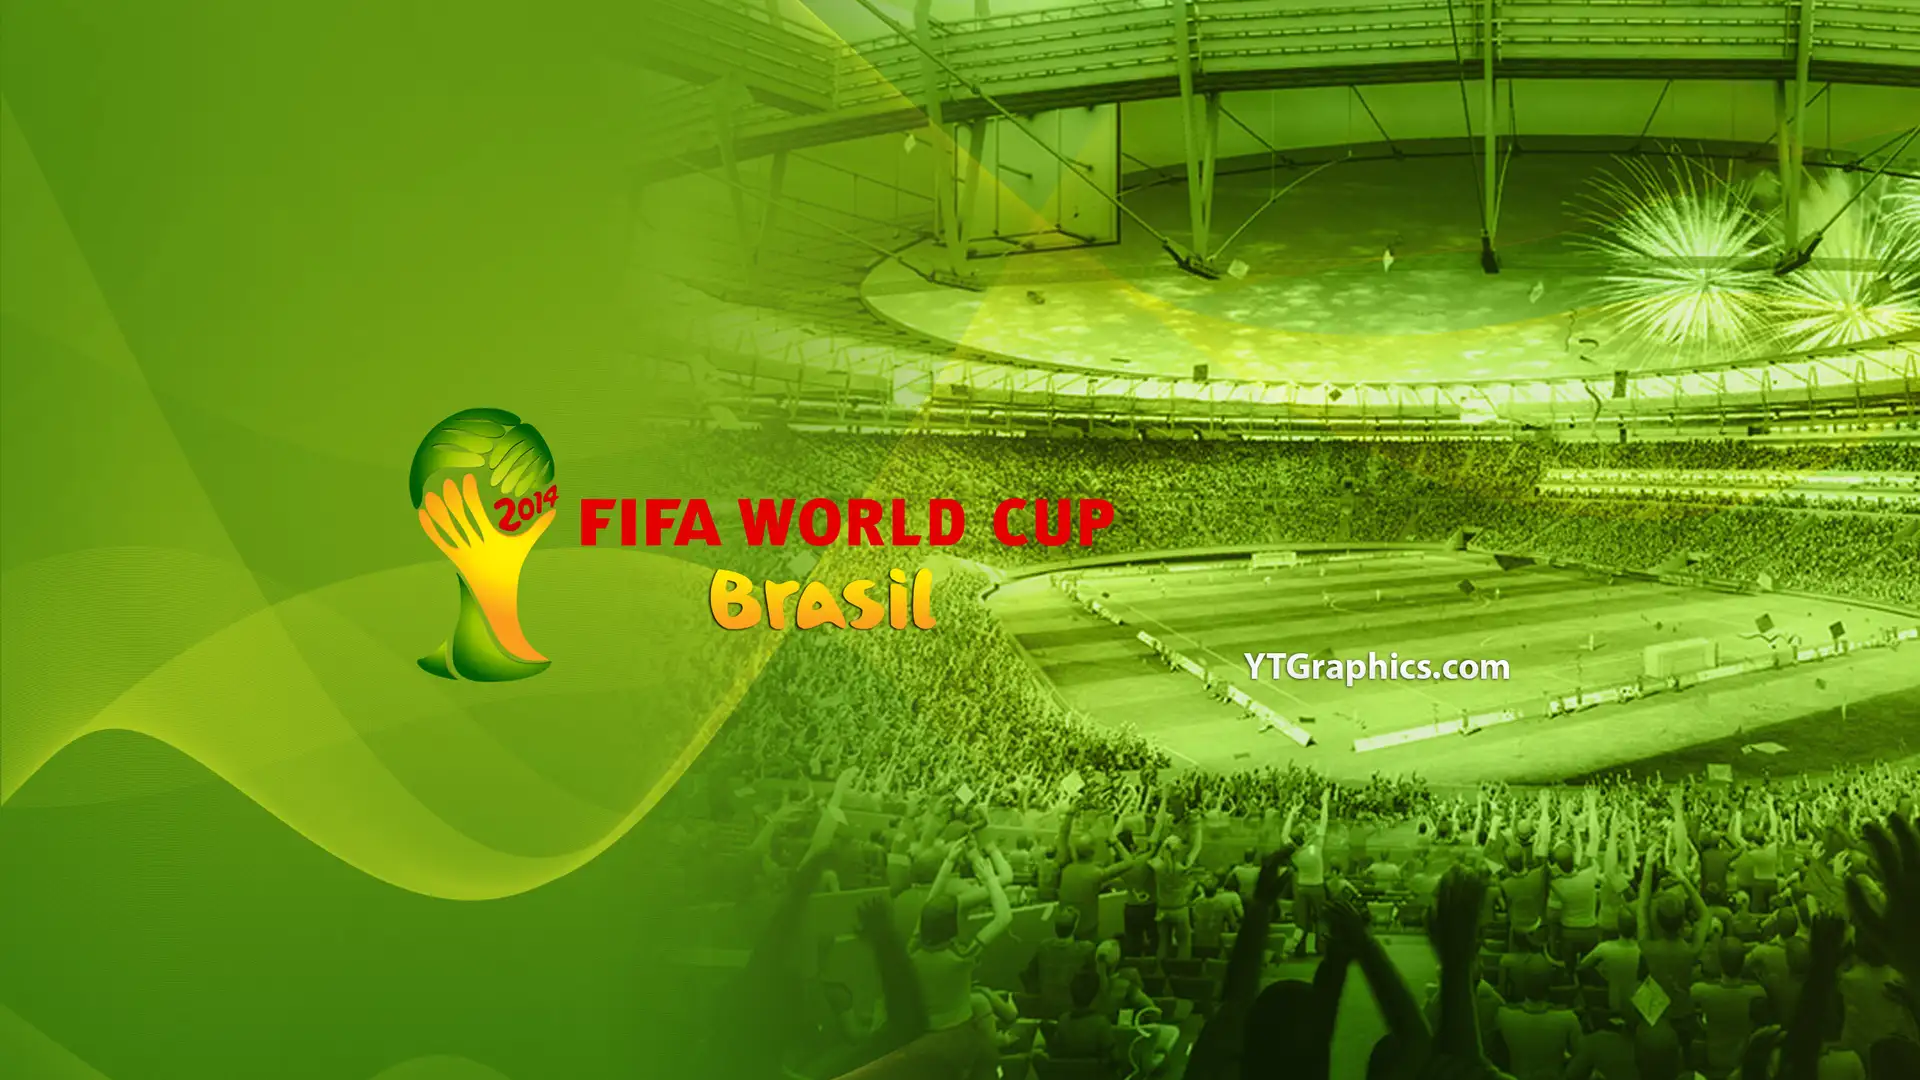 2014 FIFA World Cup Brazil Banner